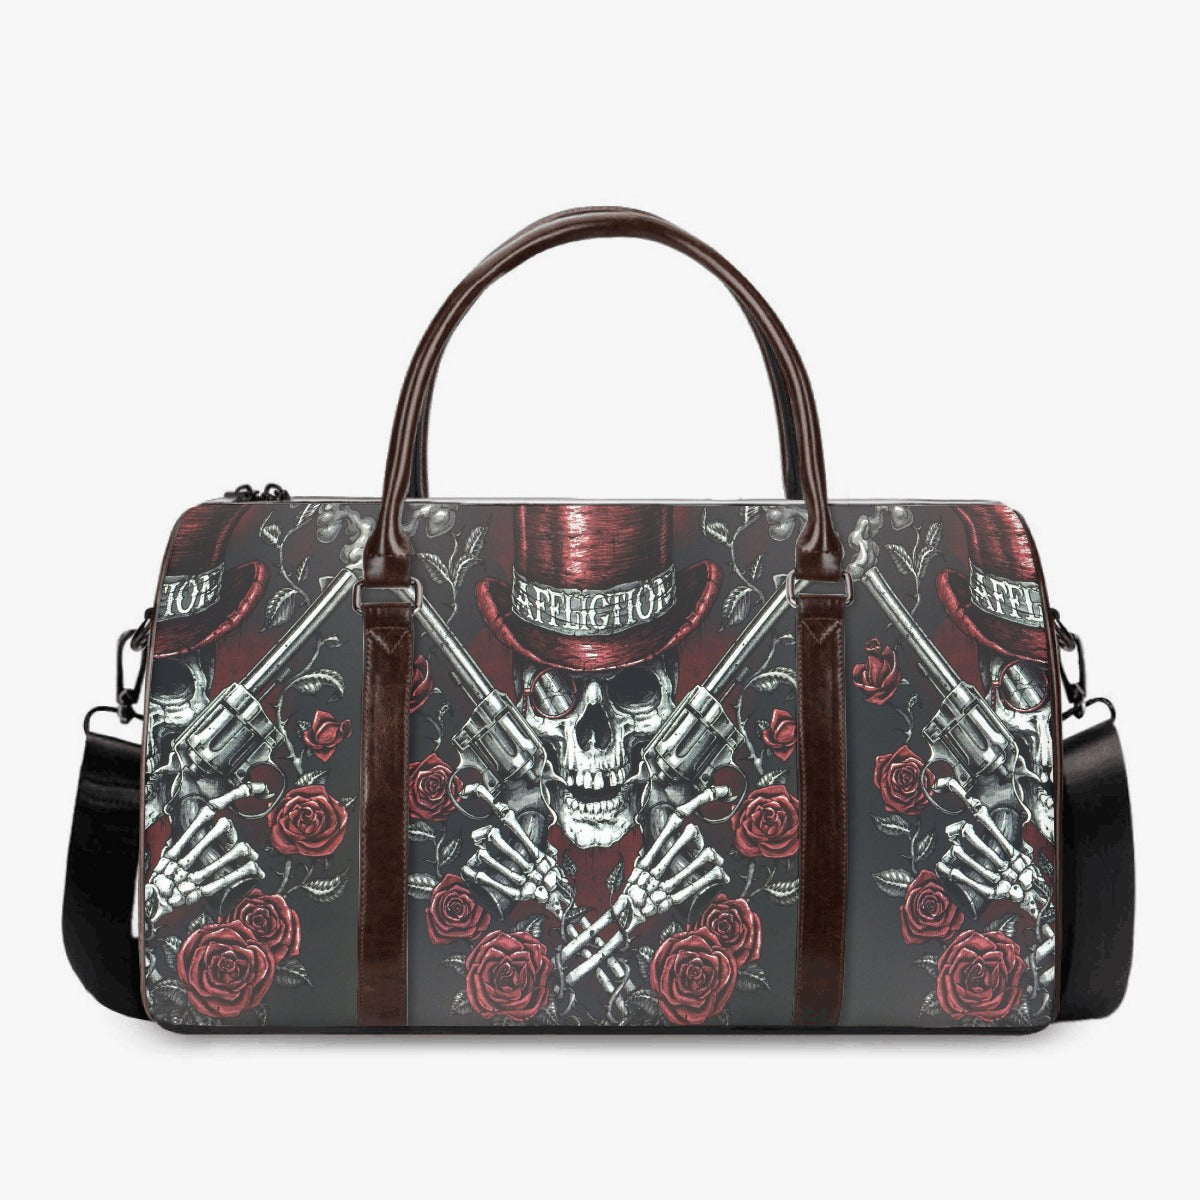 Skeleton monogrammed bag, skull Hospital Bag, punisher skull monogrammed bag, goth handbag, gothic skull handbag, punisher skull Carry On bag